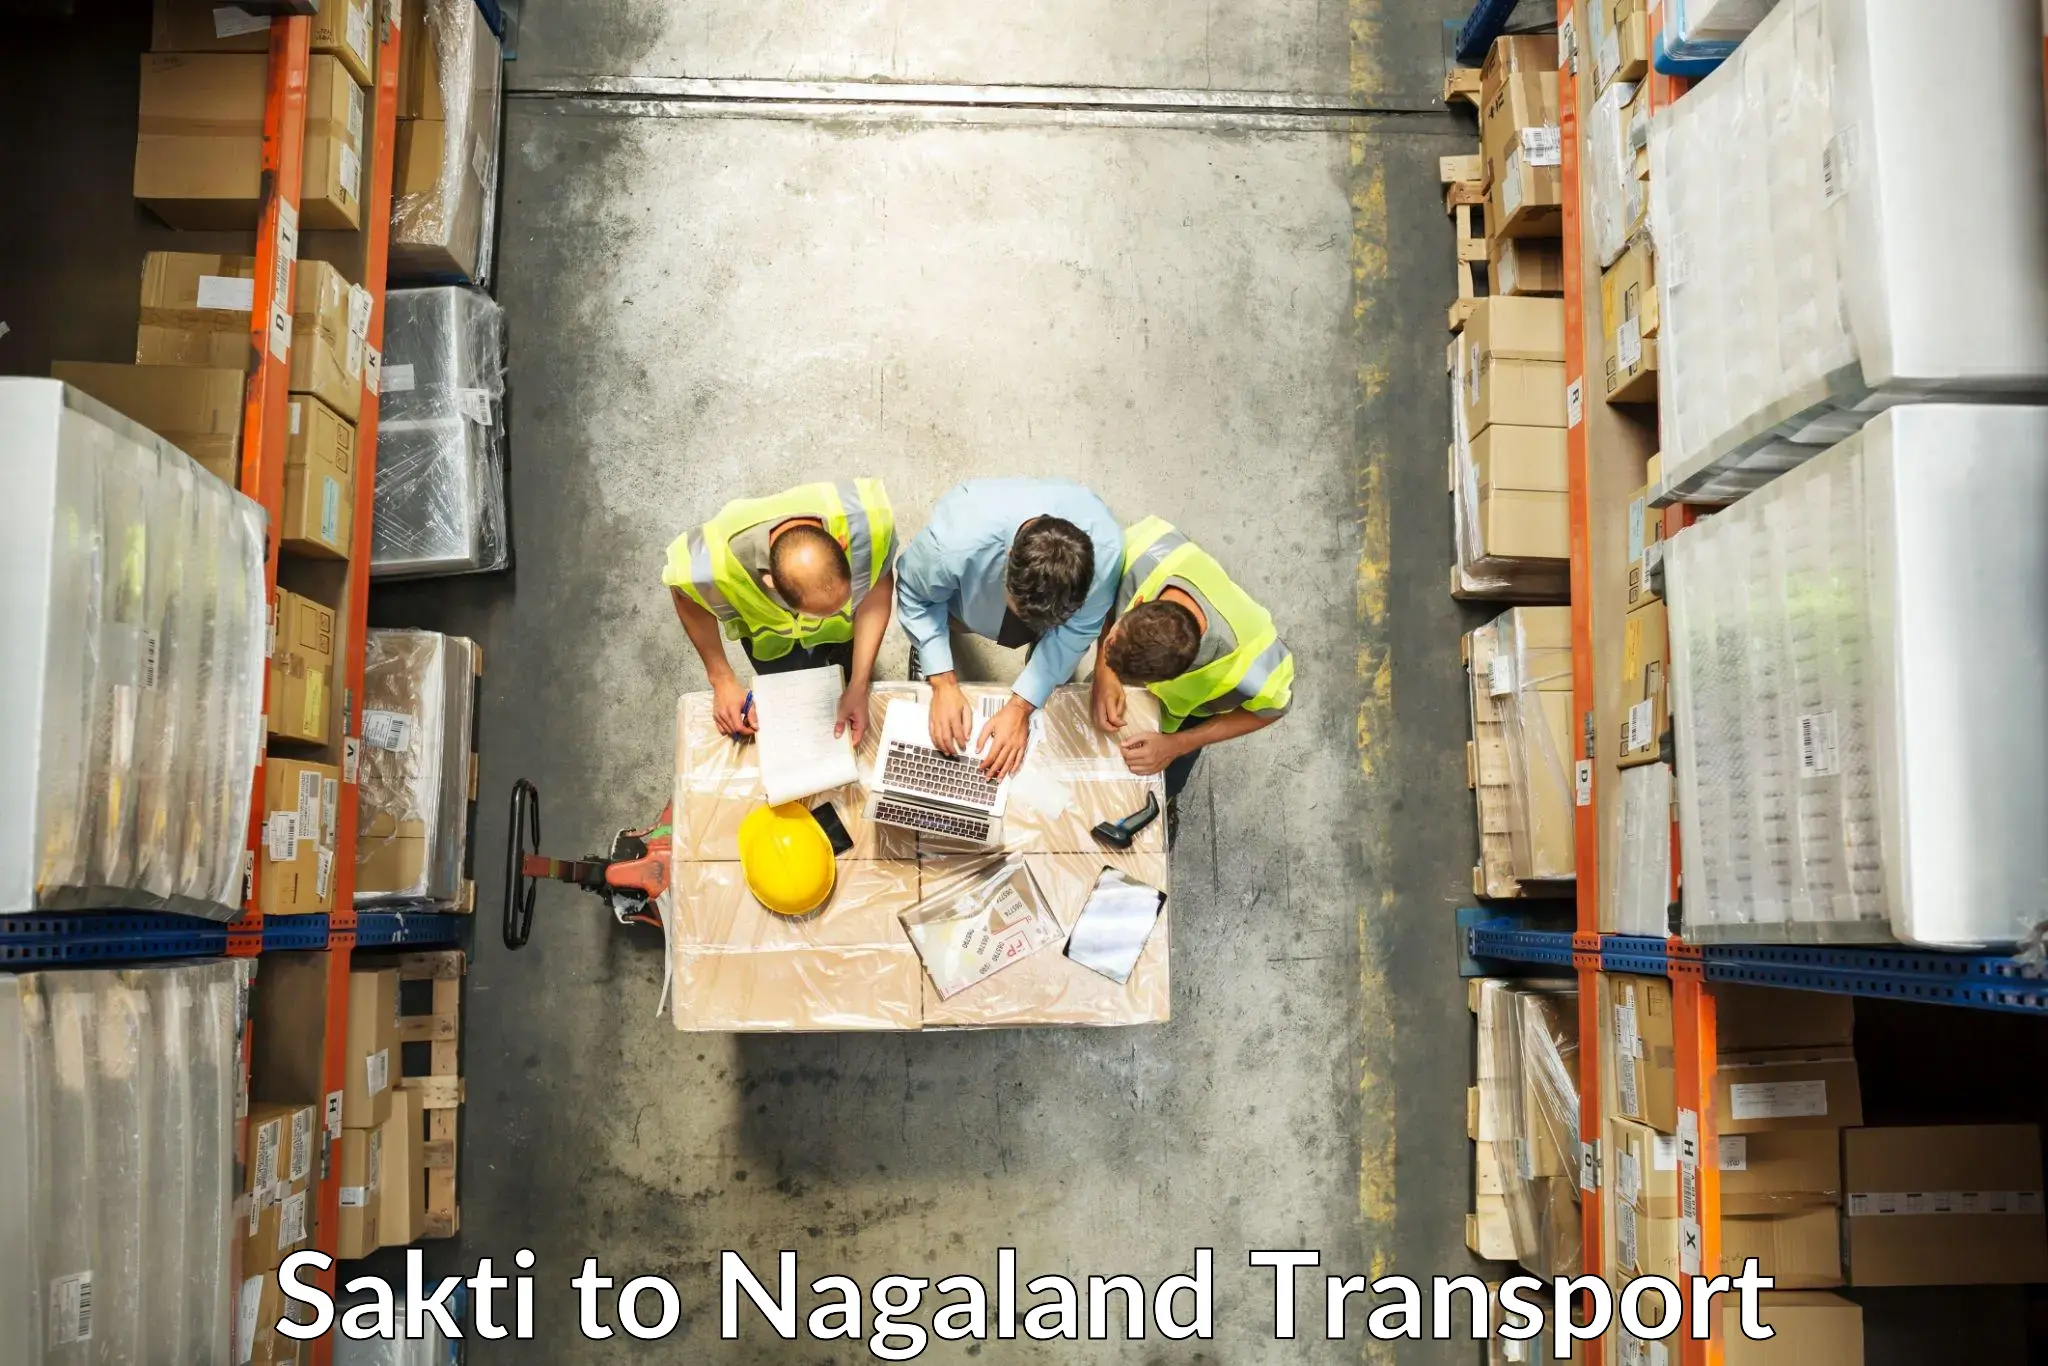 Container transport service Sakti to Nagaland